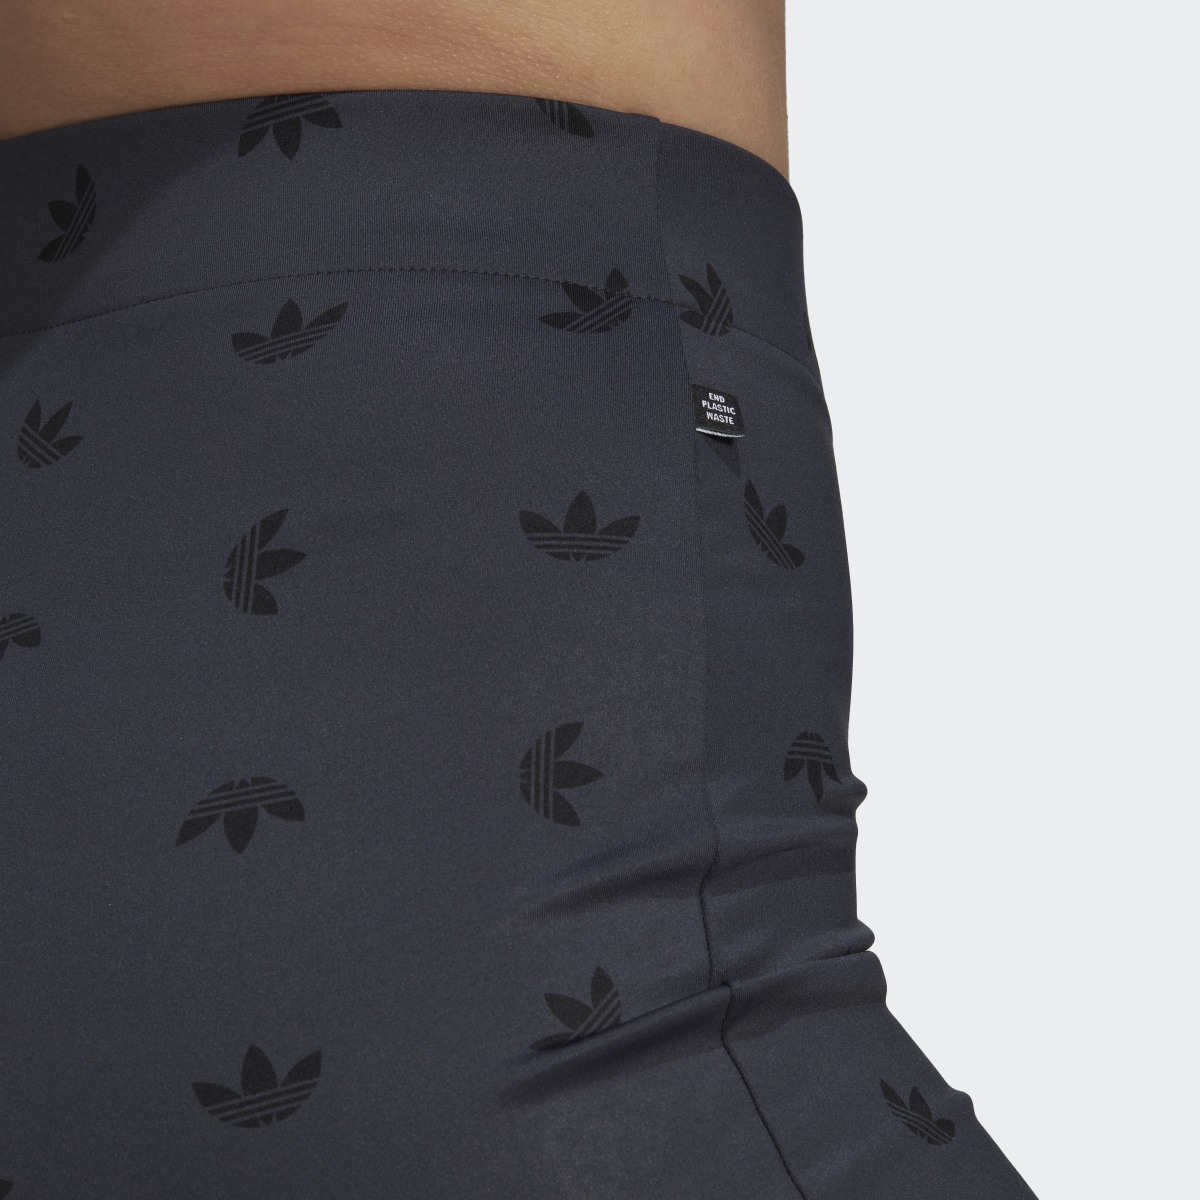 Adidas Stretchy Allover Print Pants. 7